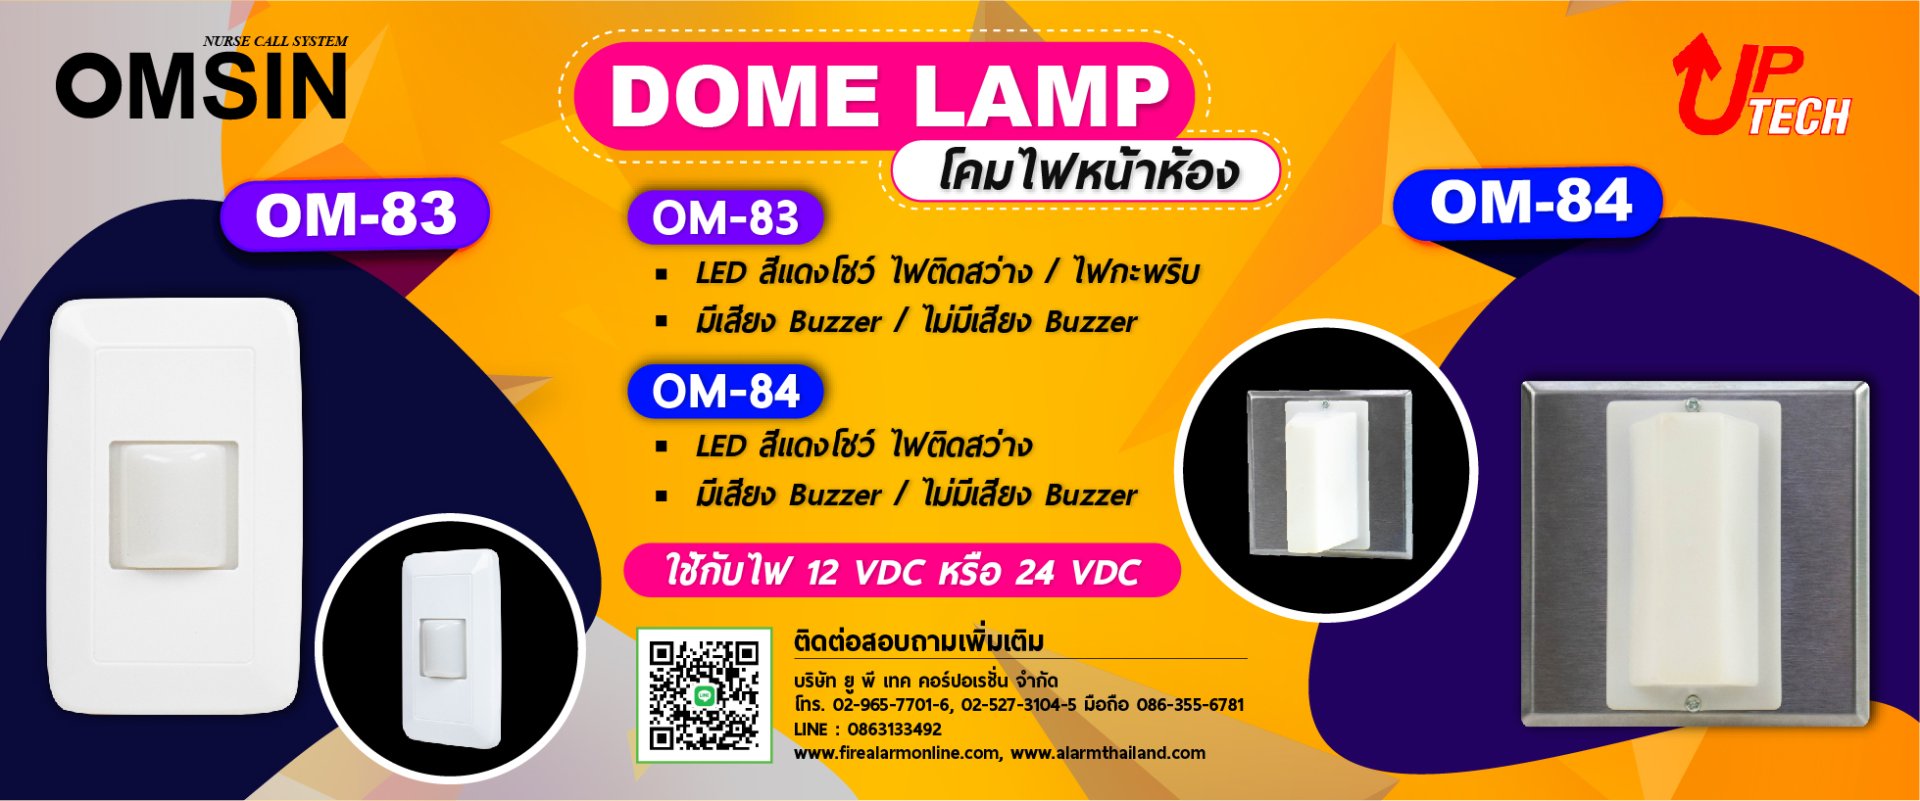 OM-83 / OM-84 Dome Lamp (โคมไฟหน้าห้อง) ยี่ห้อ OMSIN